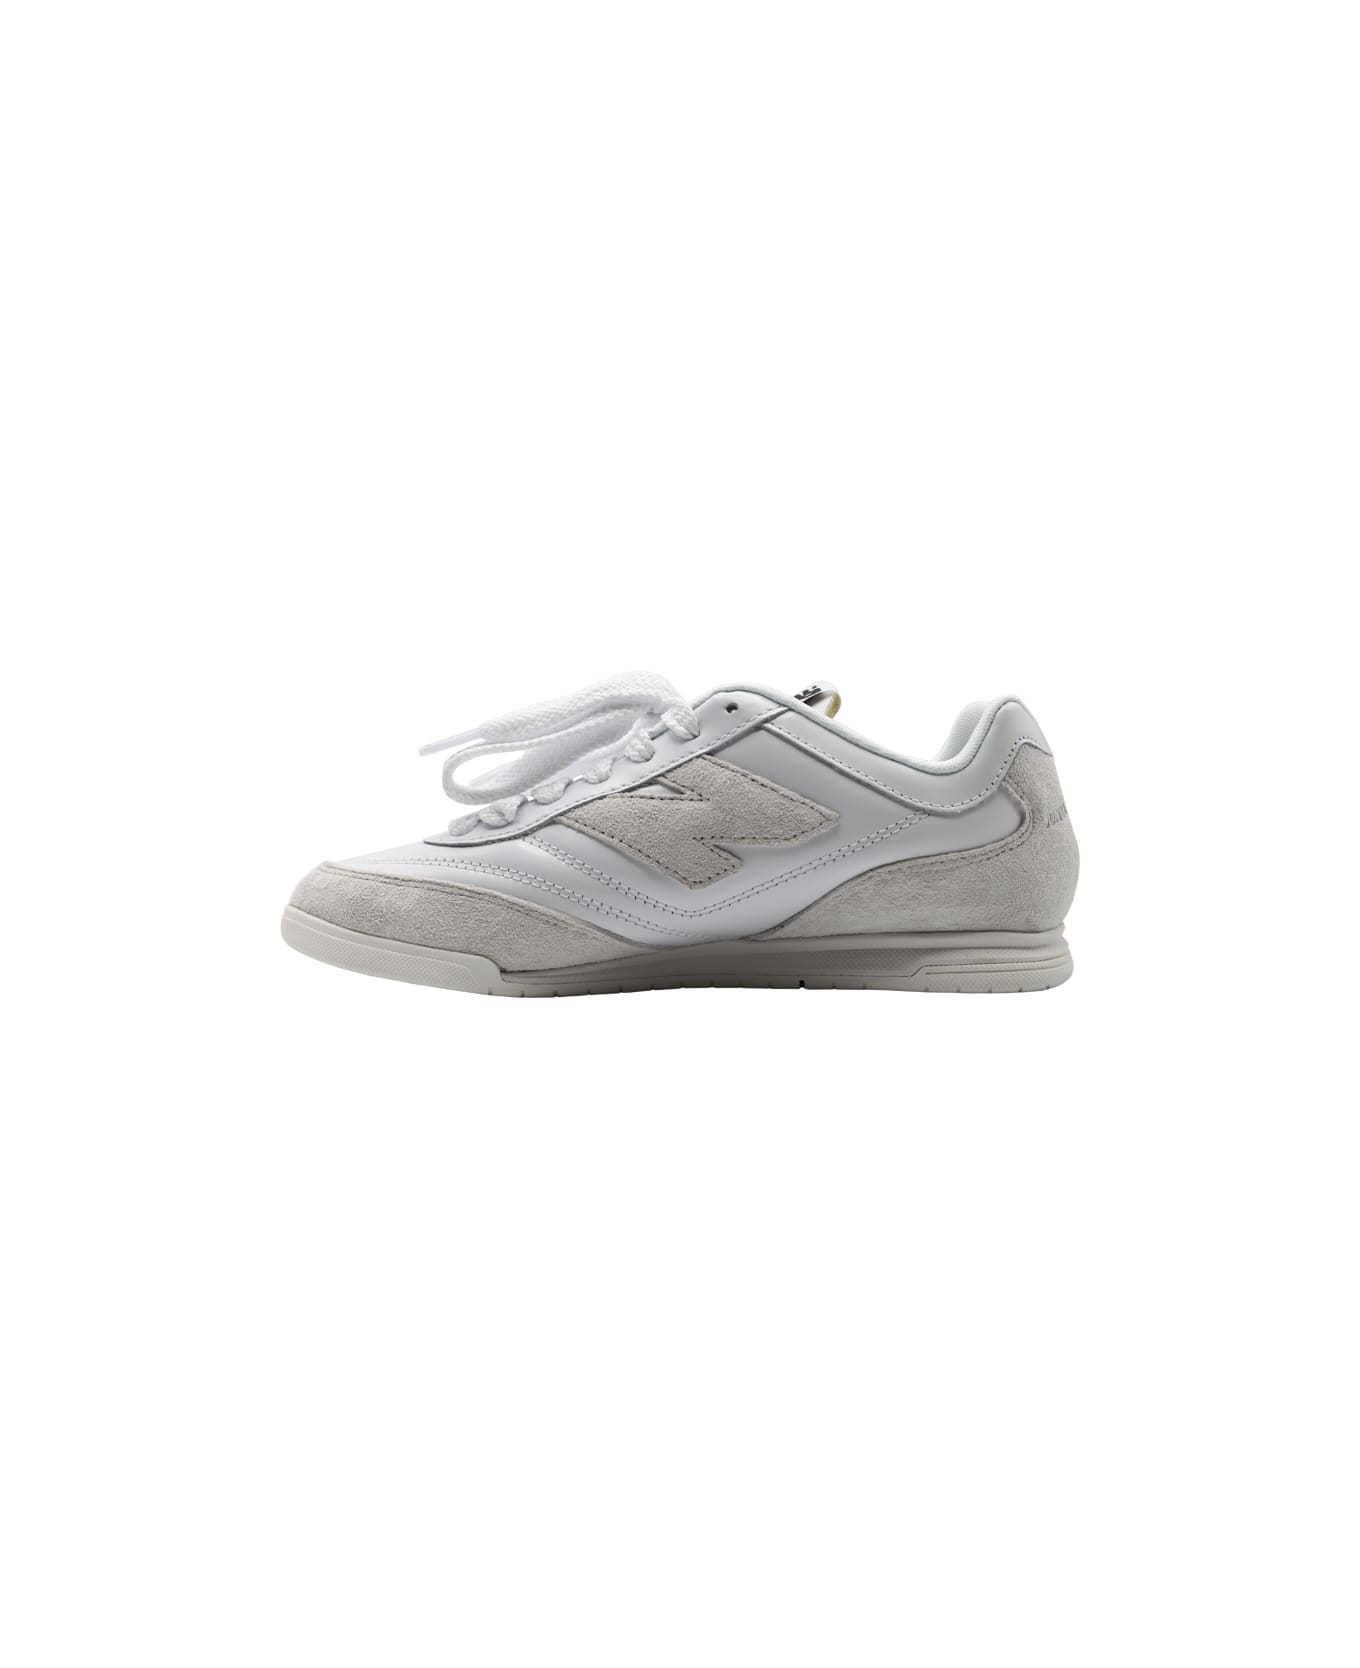 New Balance Junya Watanabe X New Balance Urc42 Sneakers - White